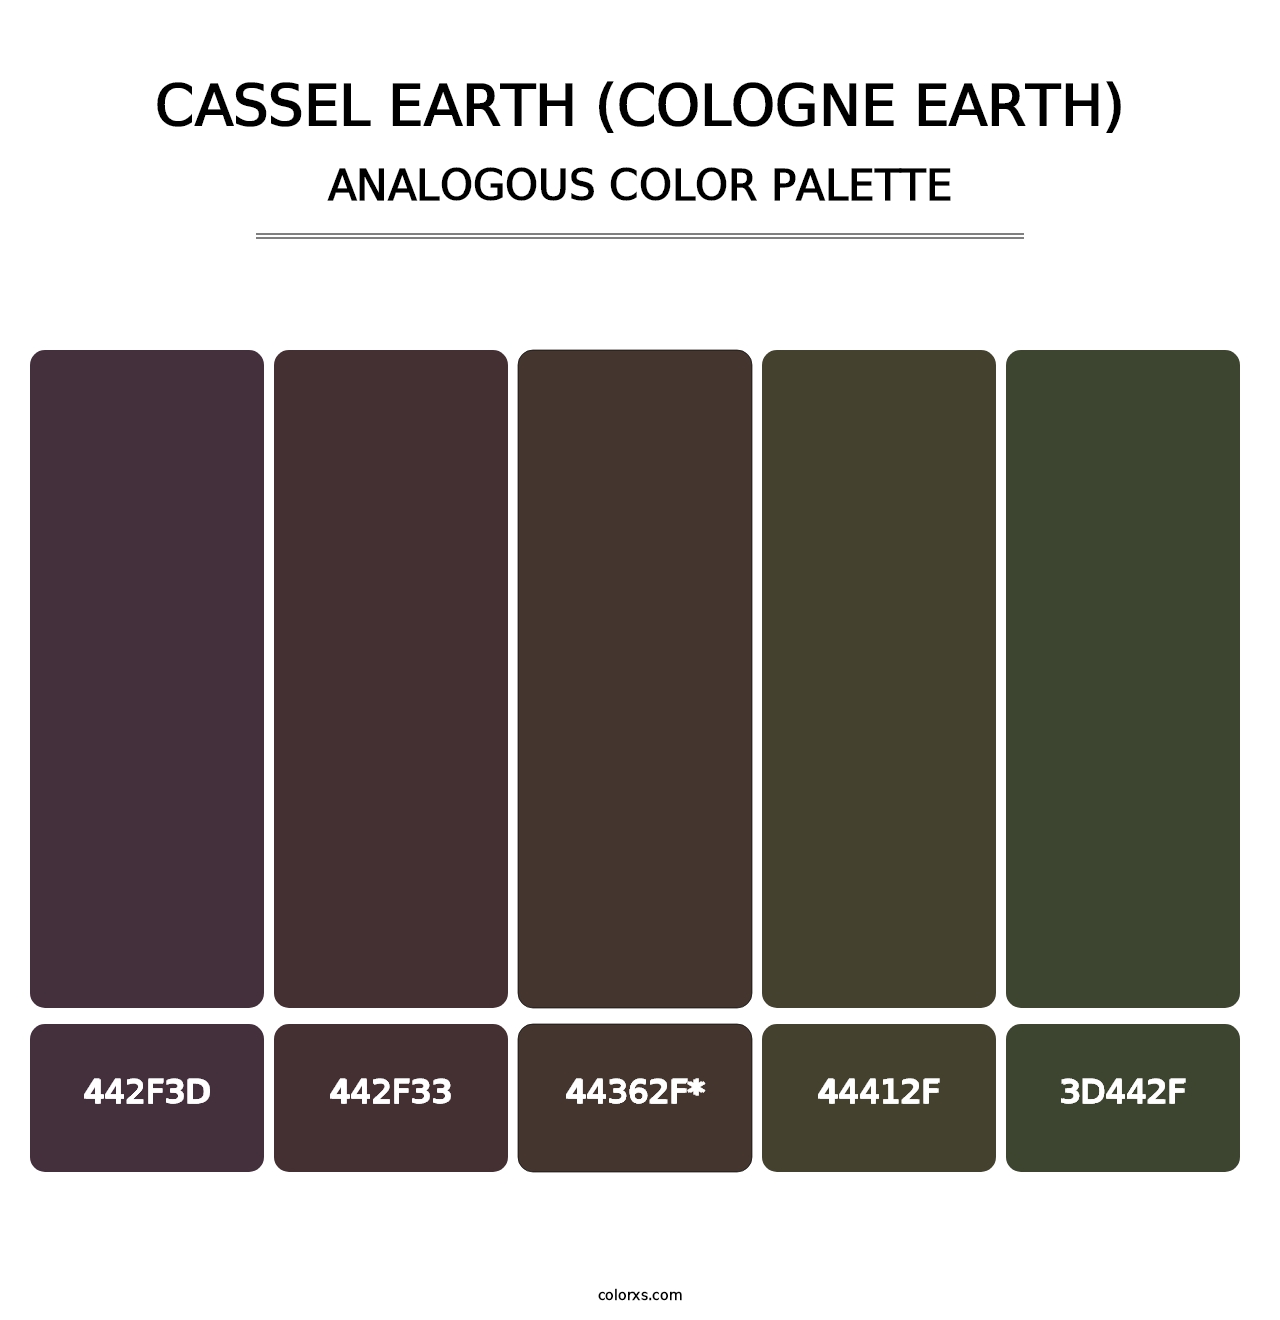 Cassel Earth (Cologne Earth) - Analogous Color Palette